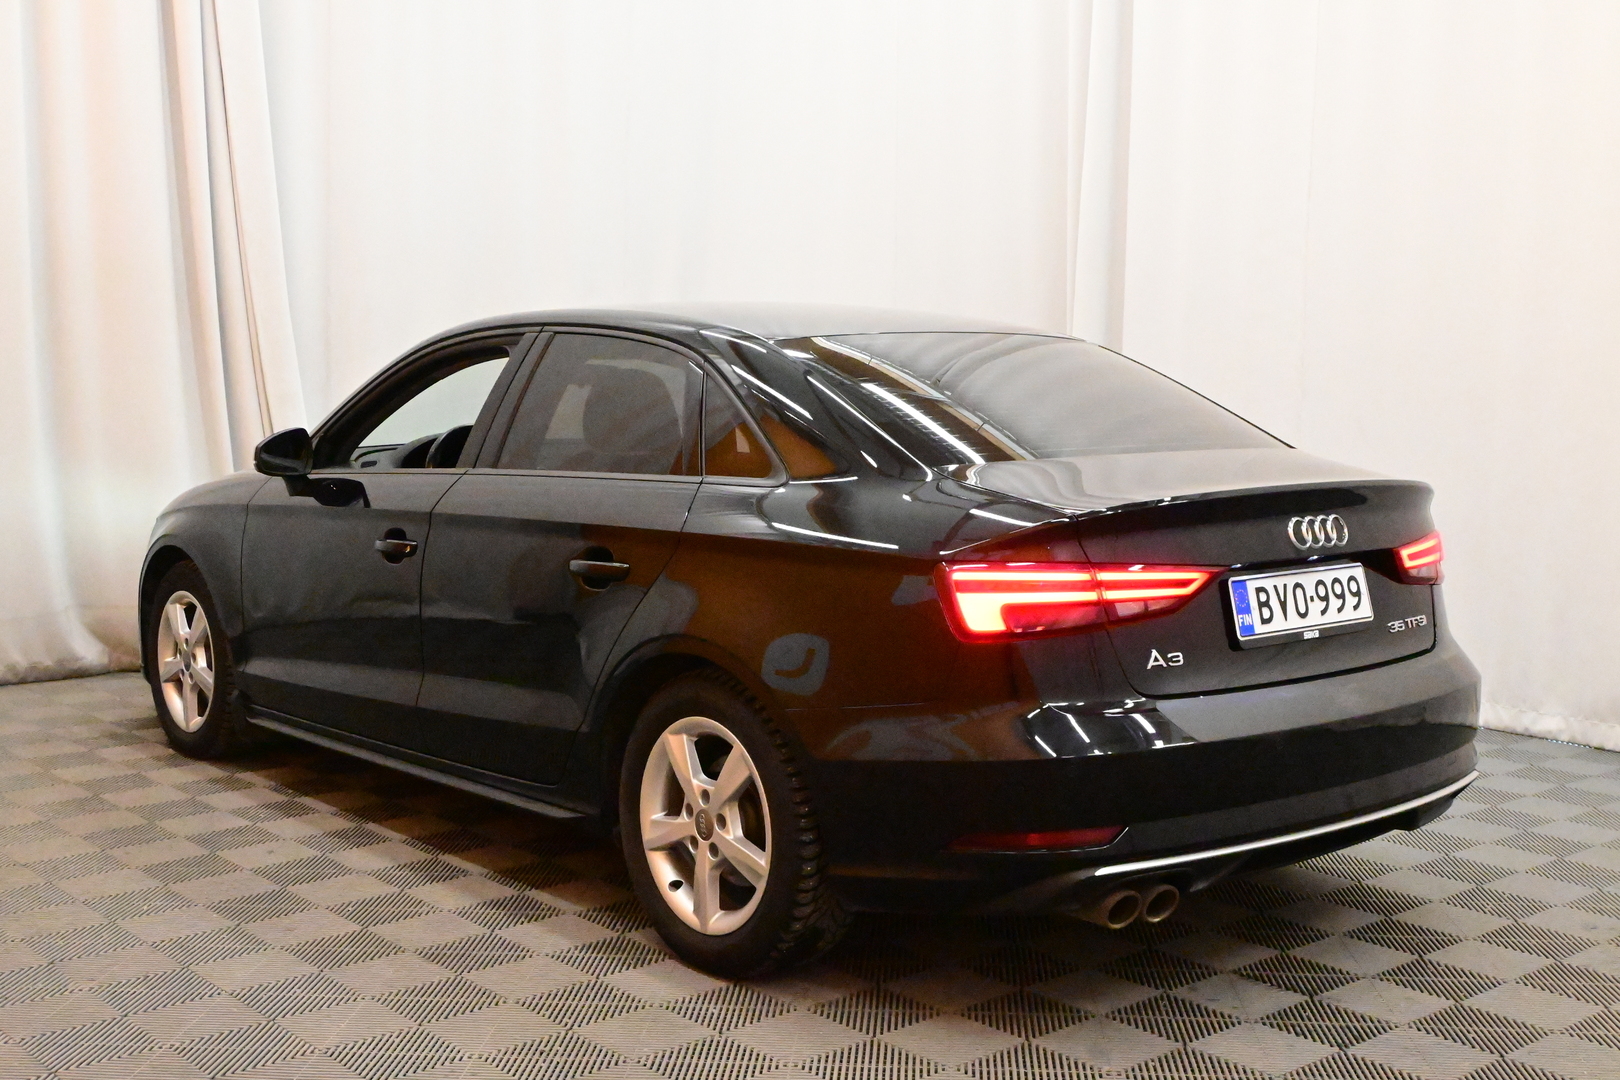 Musta Sedan, Audi A3 – BVO-999